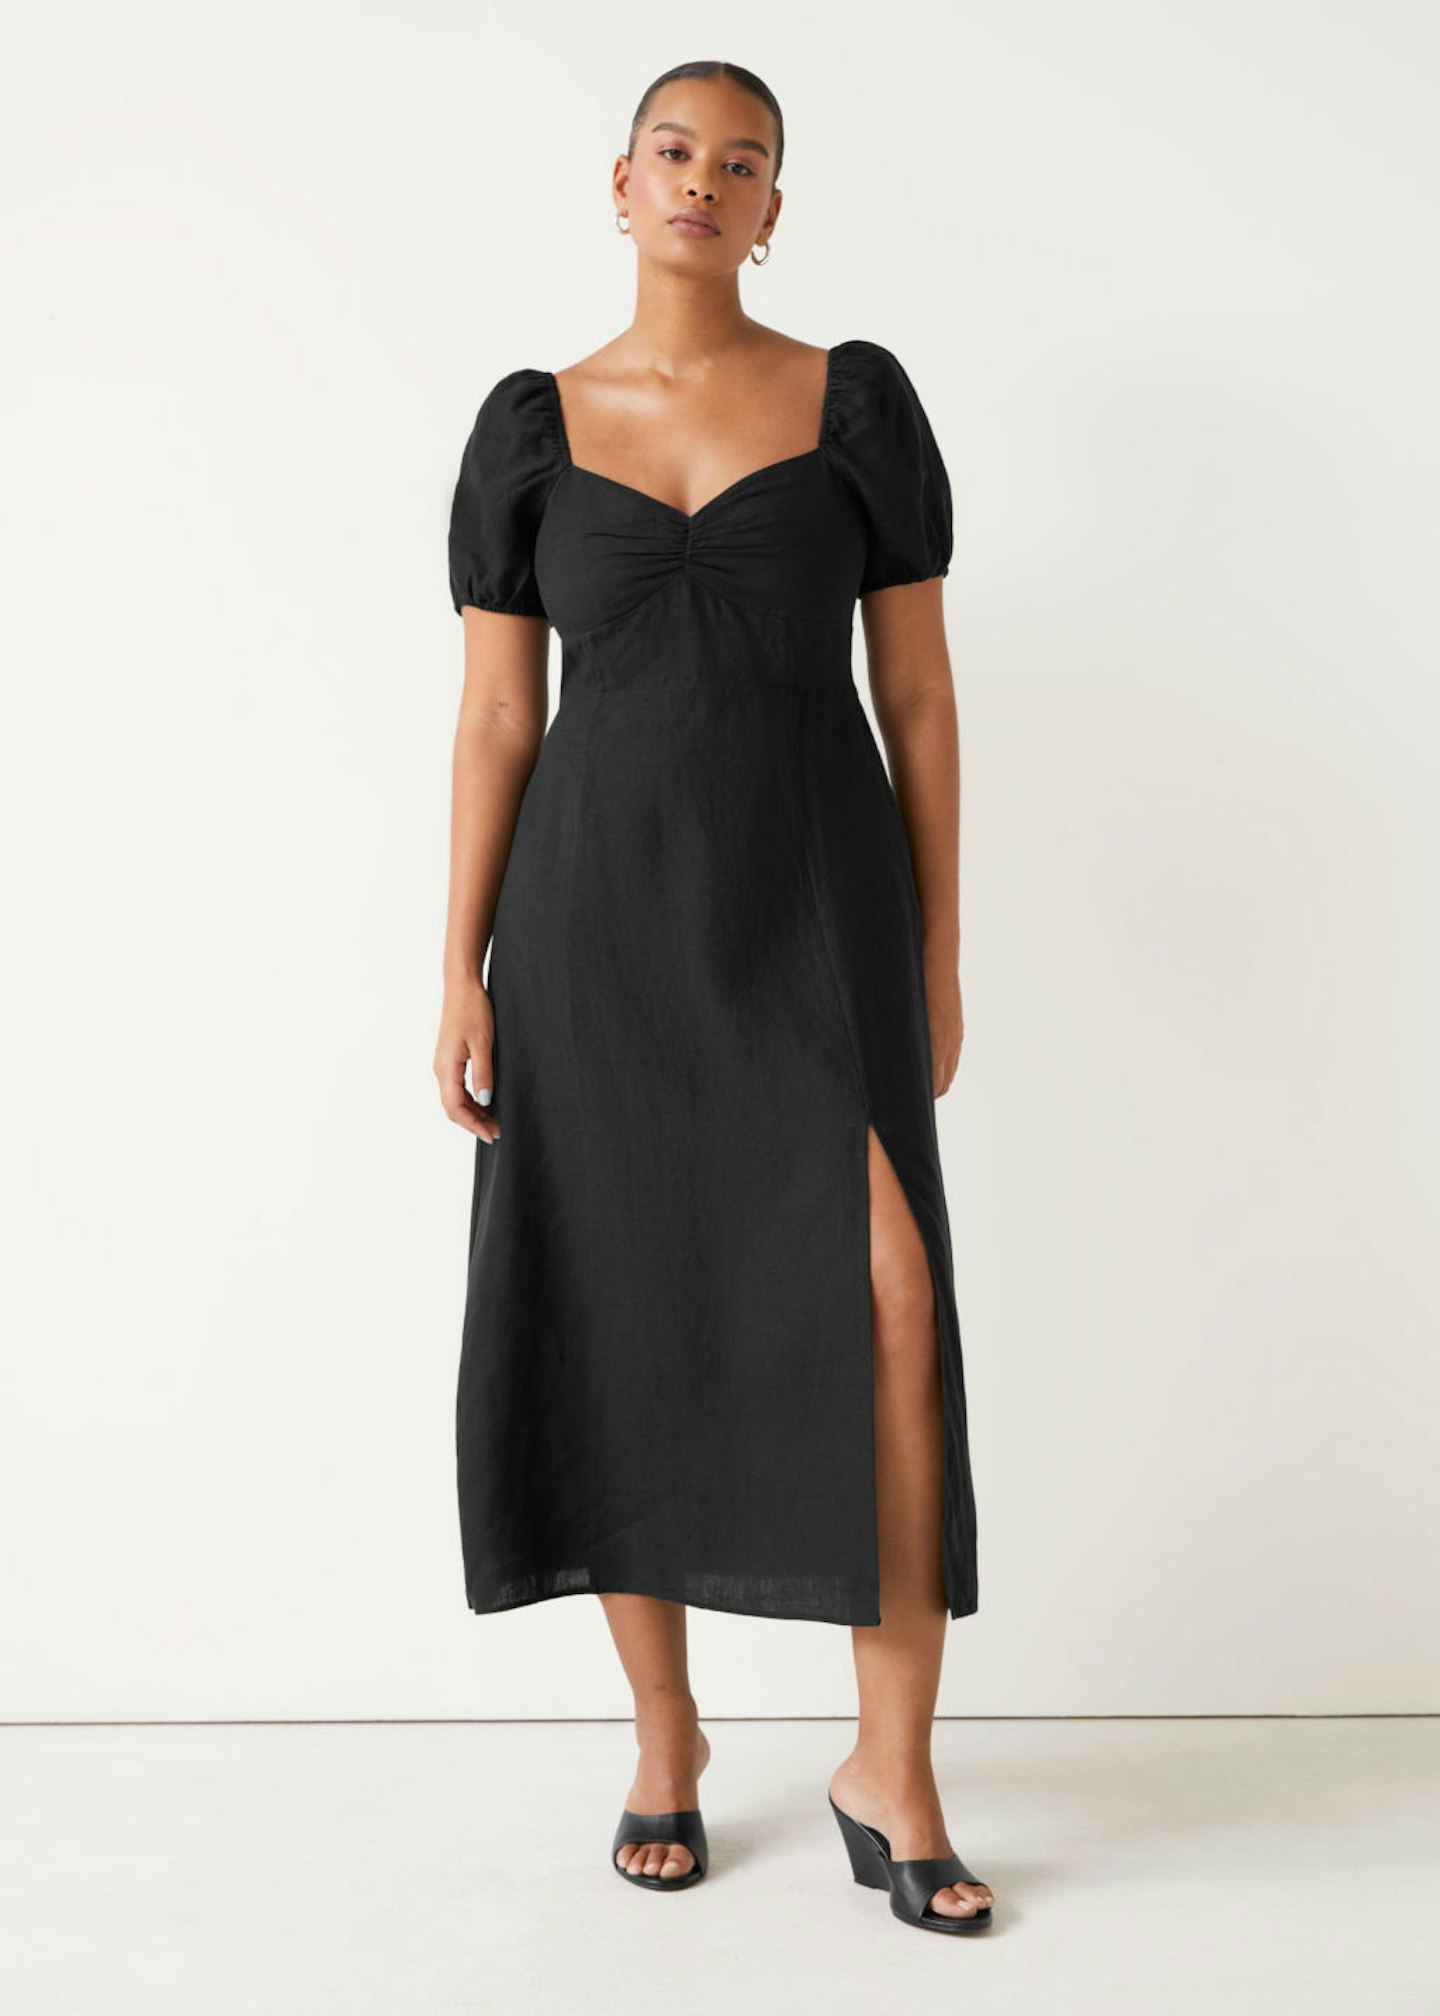 & Other Stories, Puff-Sleeve Linen Midi Dress, £95